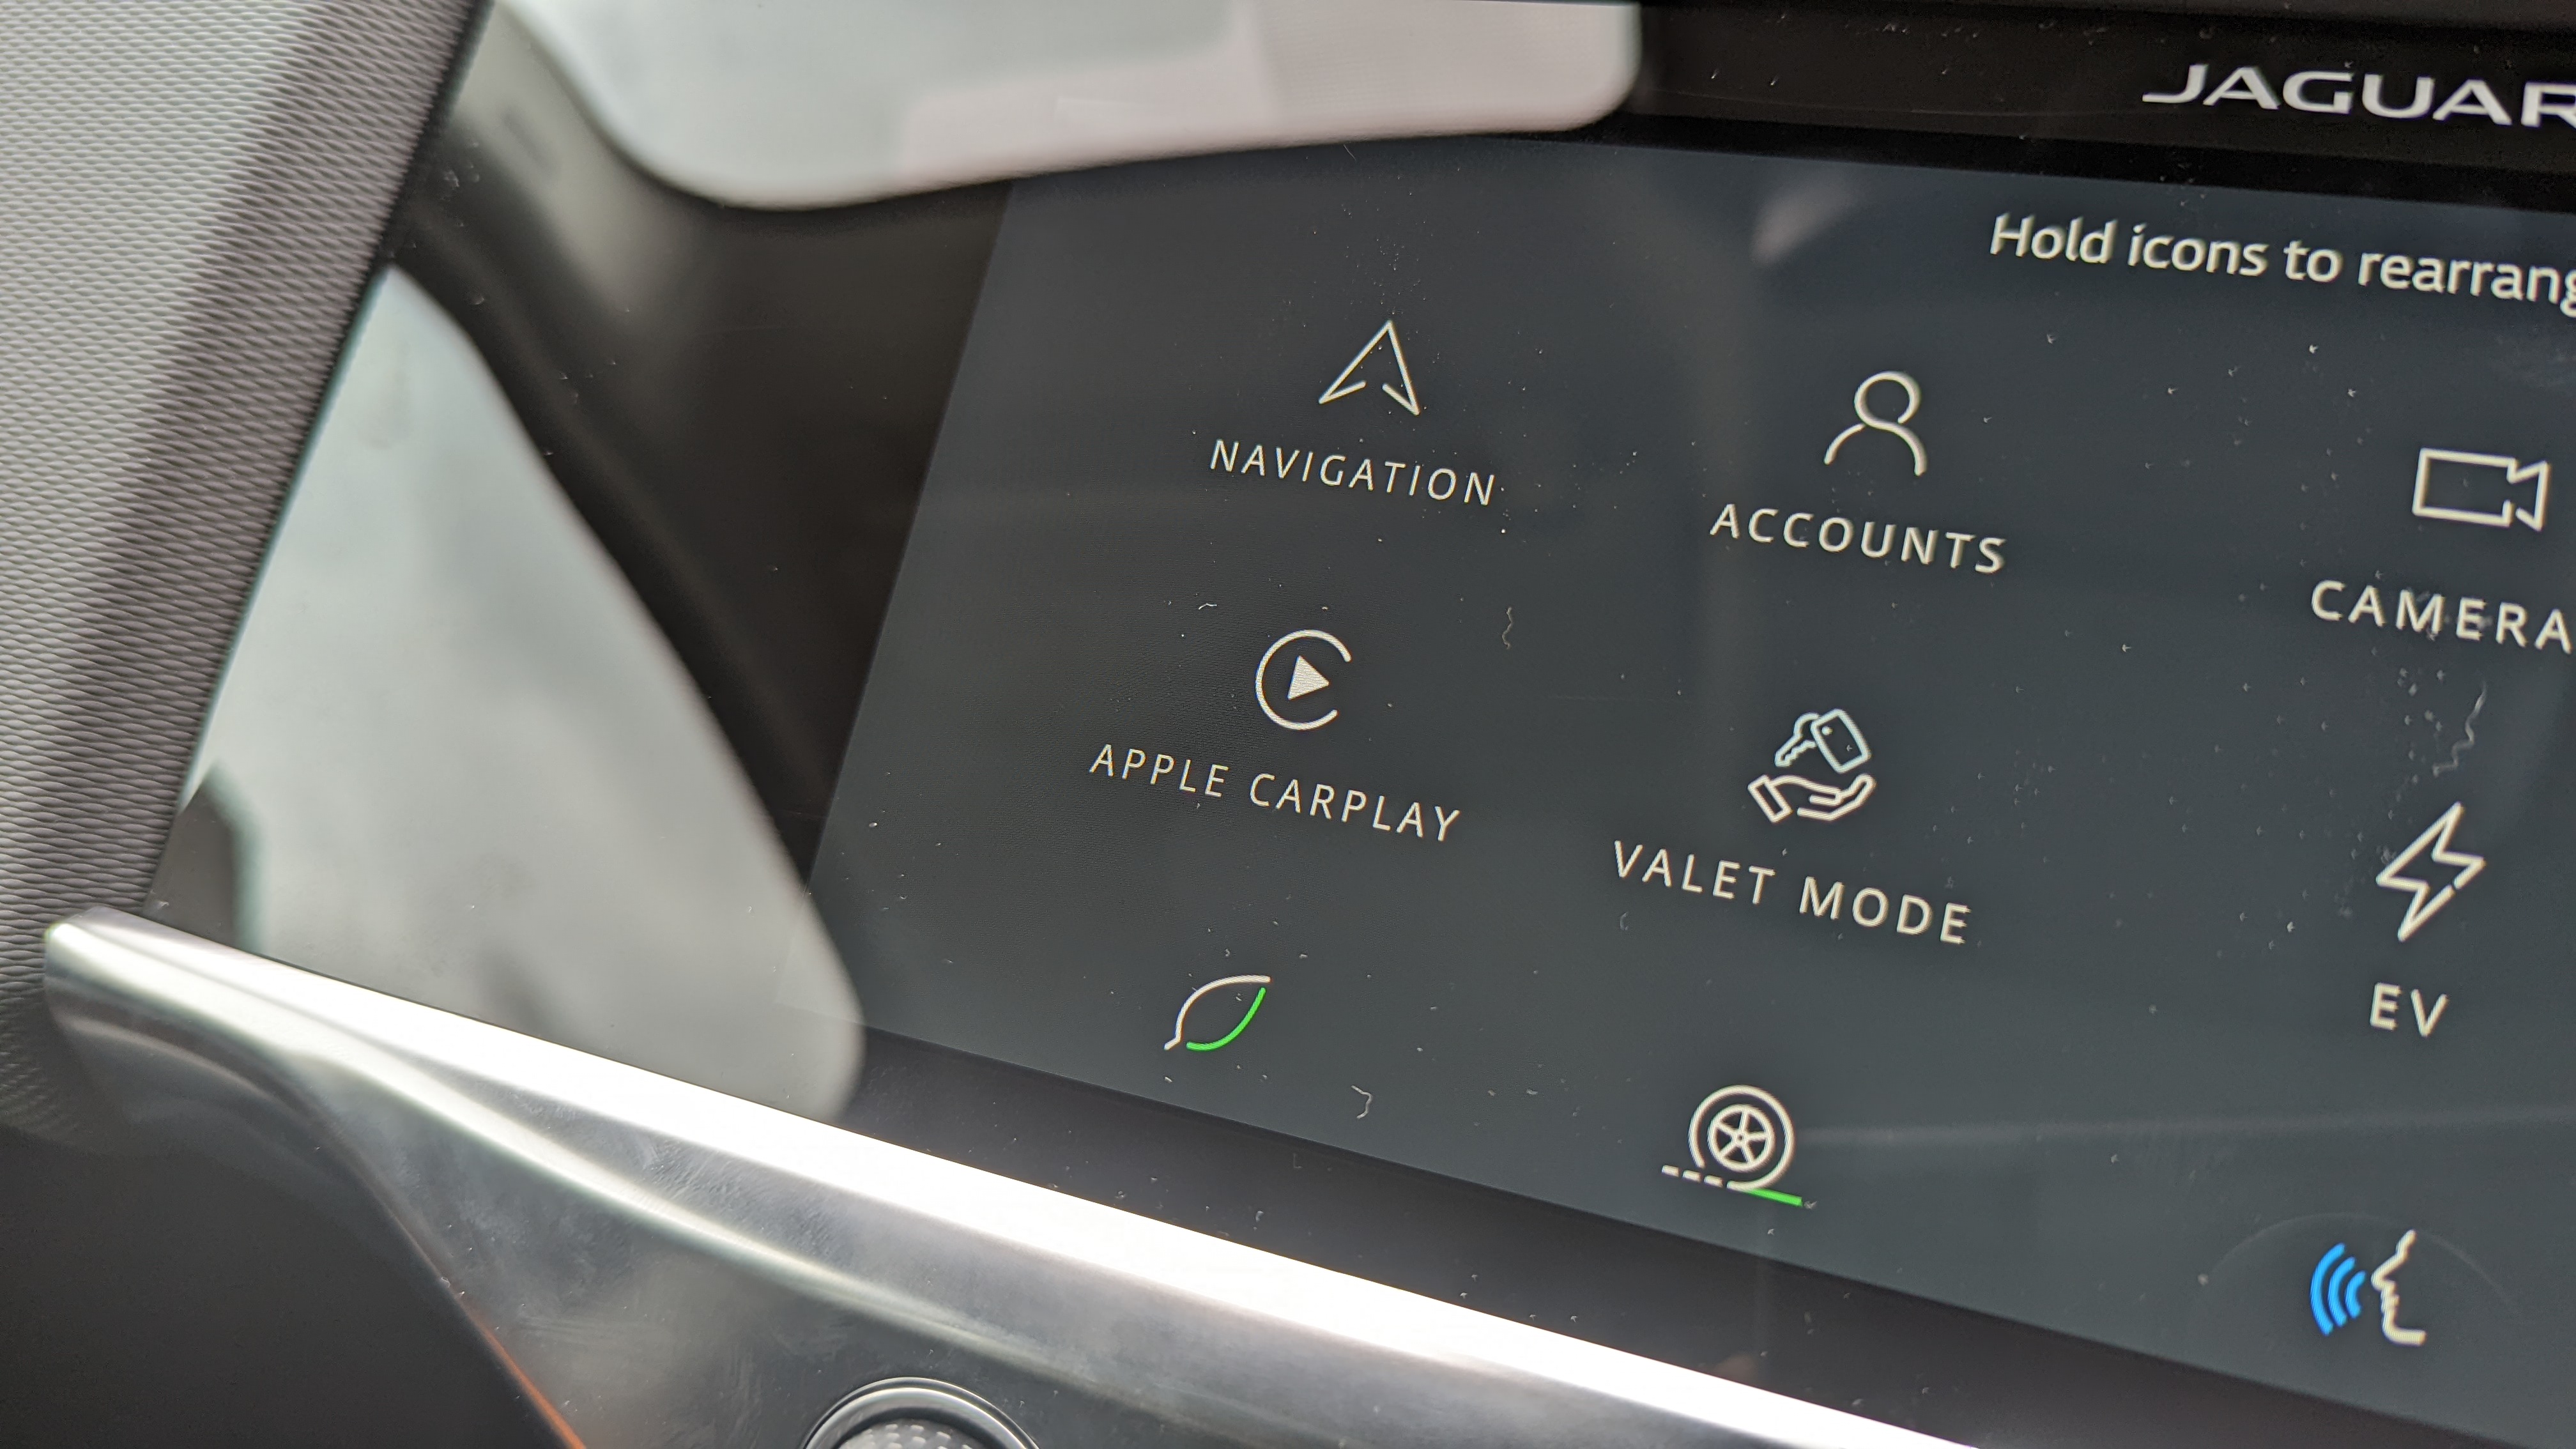 Apple CarPlay button on Jaguar iFace